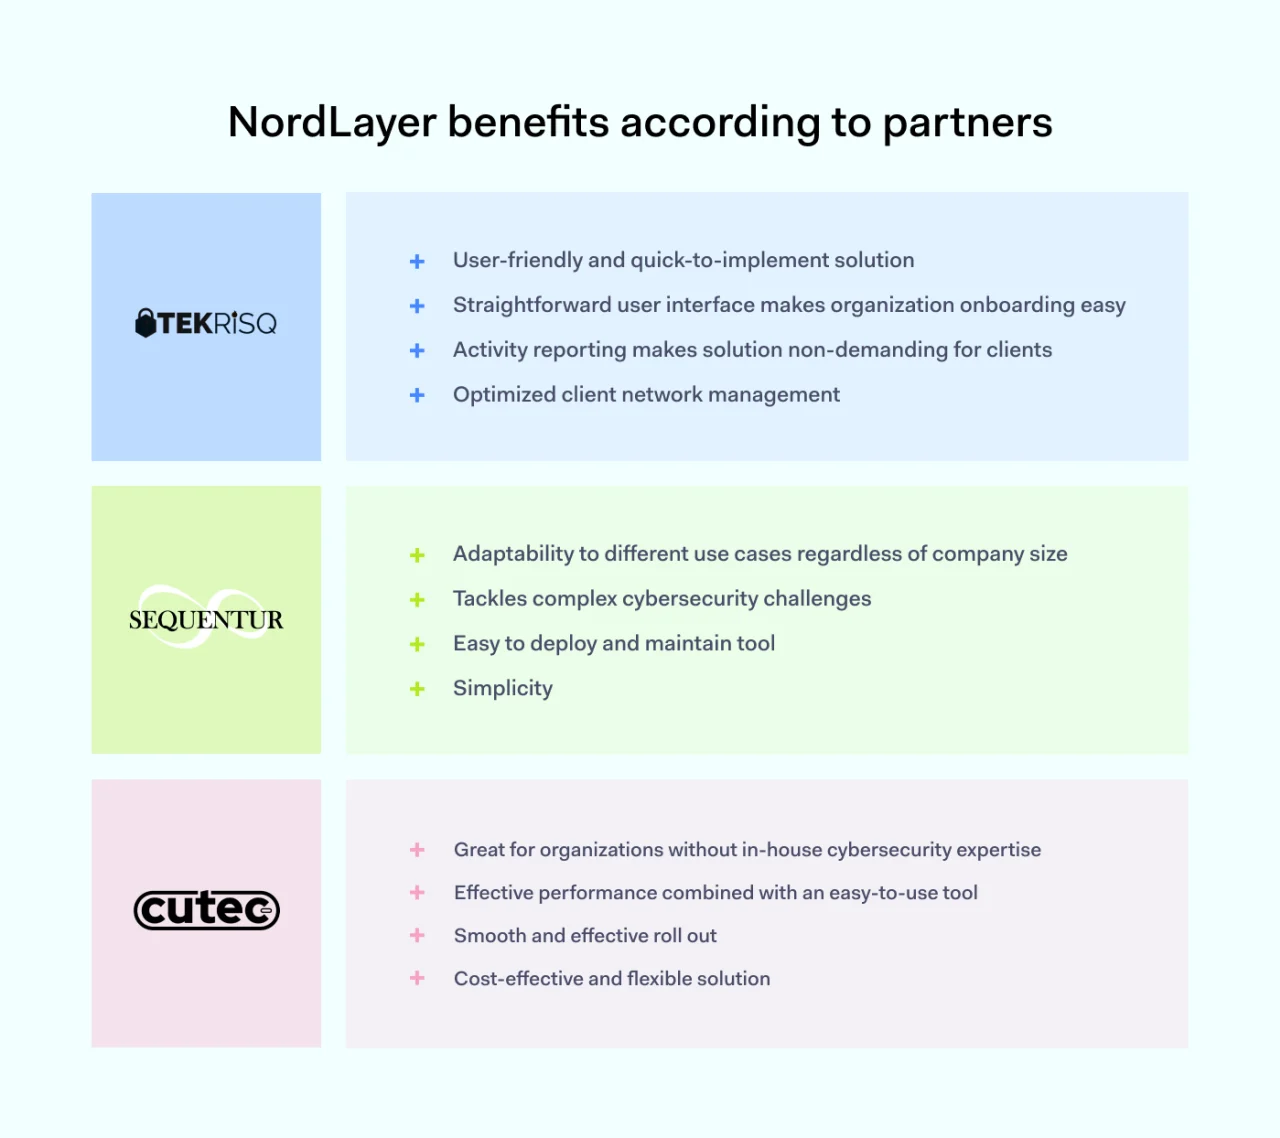 NordLayer benefits according to partners